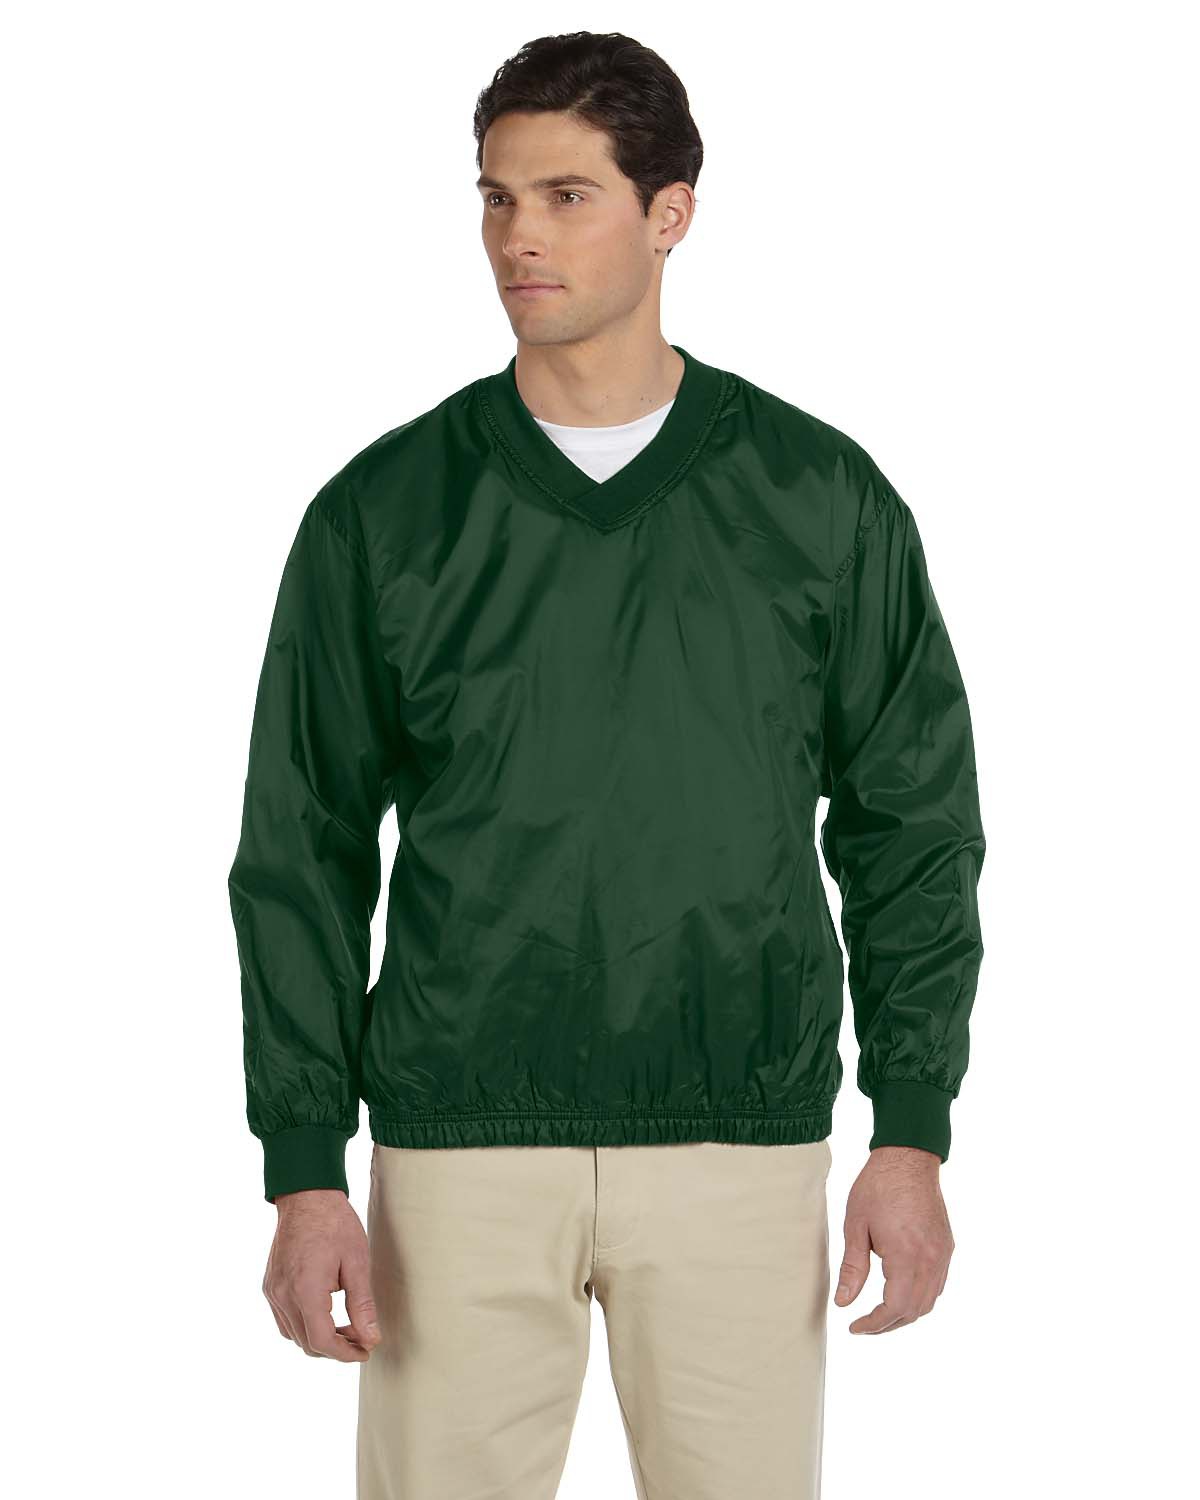 Harriton Athletic V-Neck Pullover Jacket